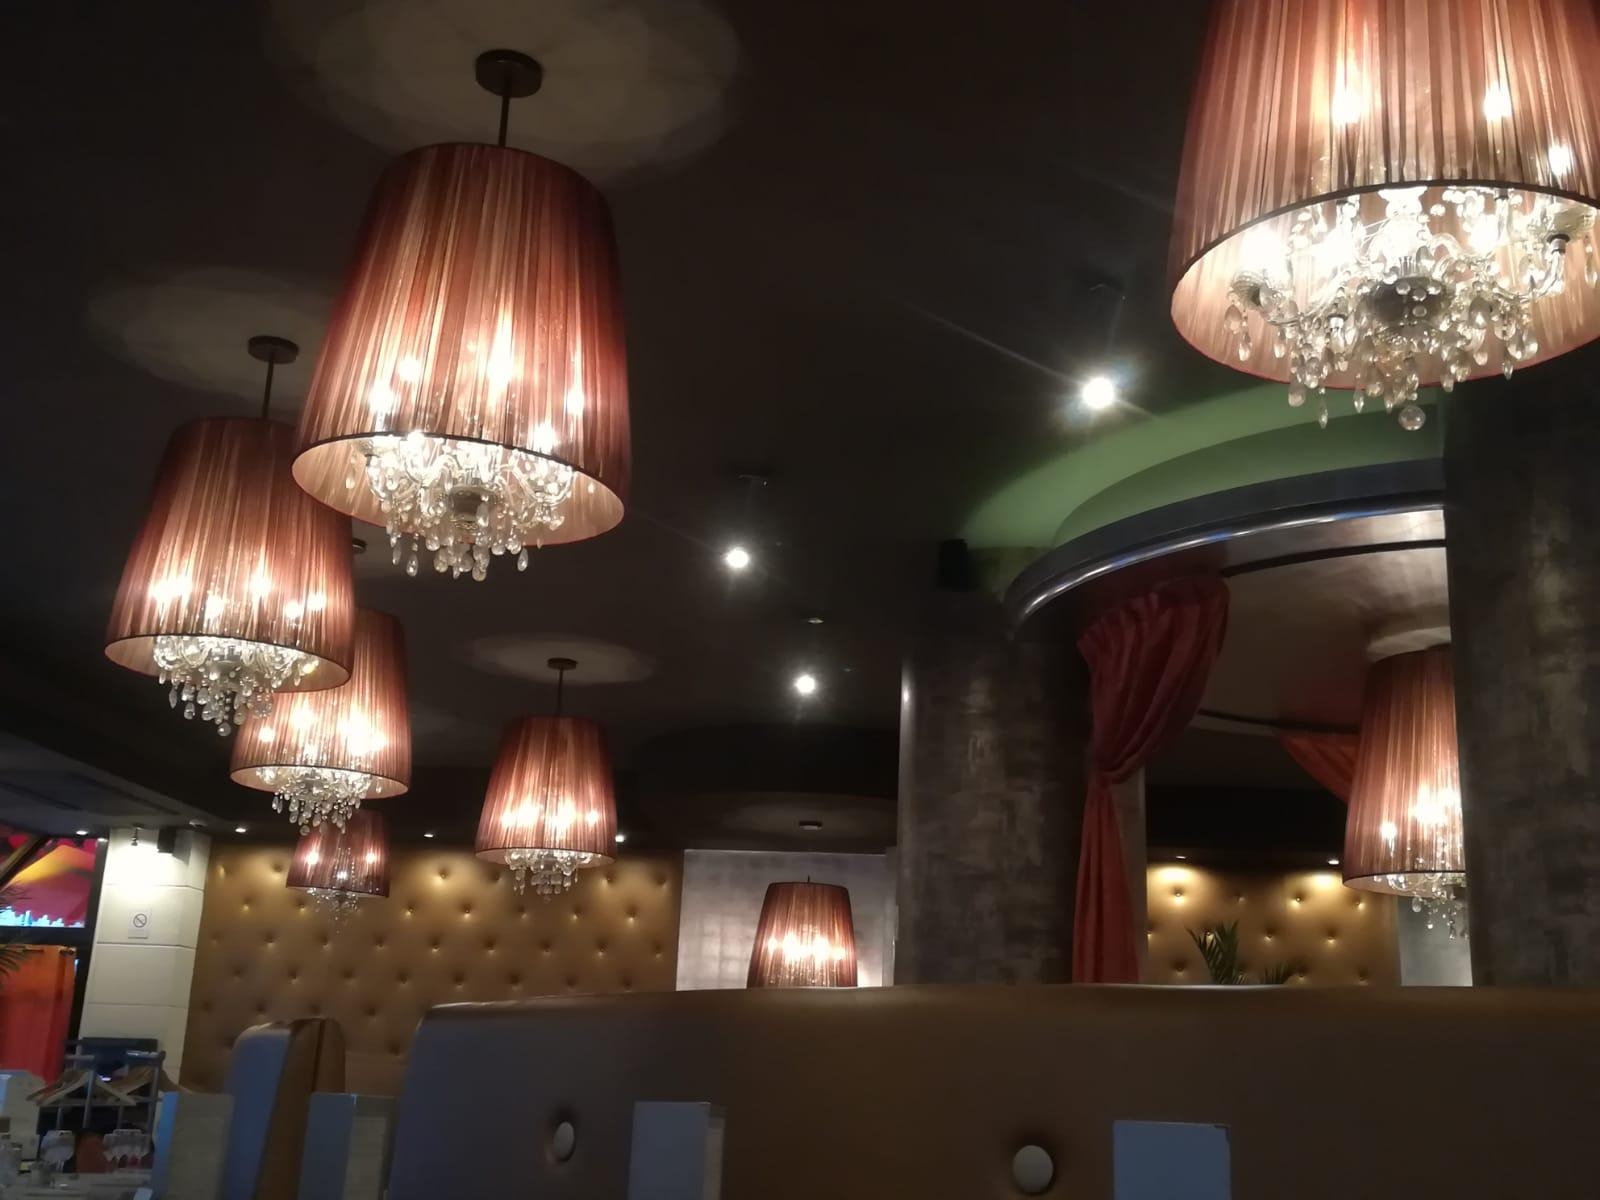 Schöne Lampen in Paris entdeckt #classic #lights #petitdejeuner #garedelest